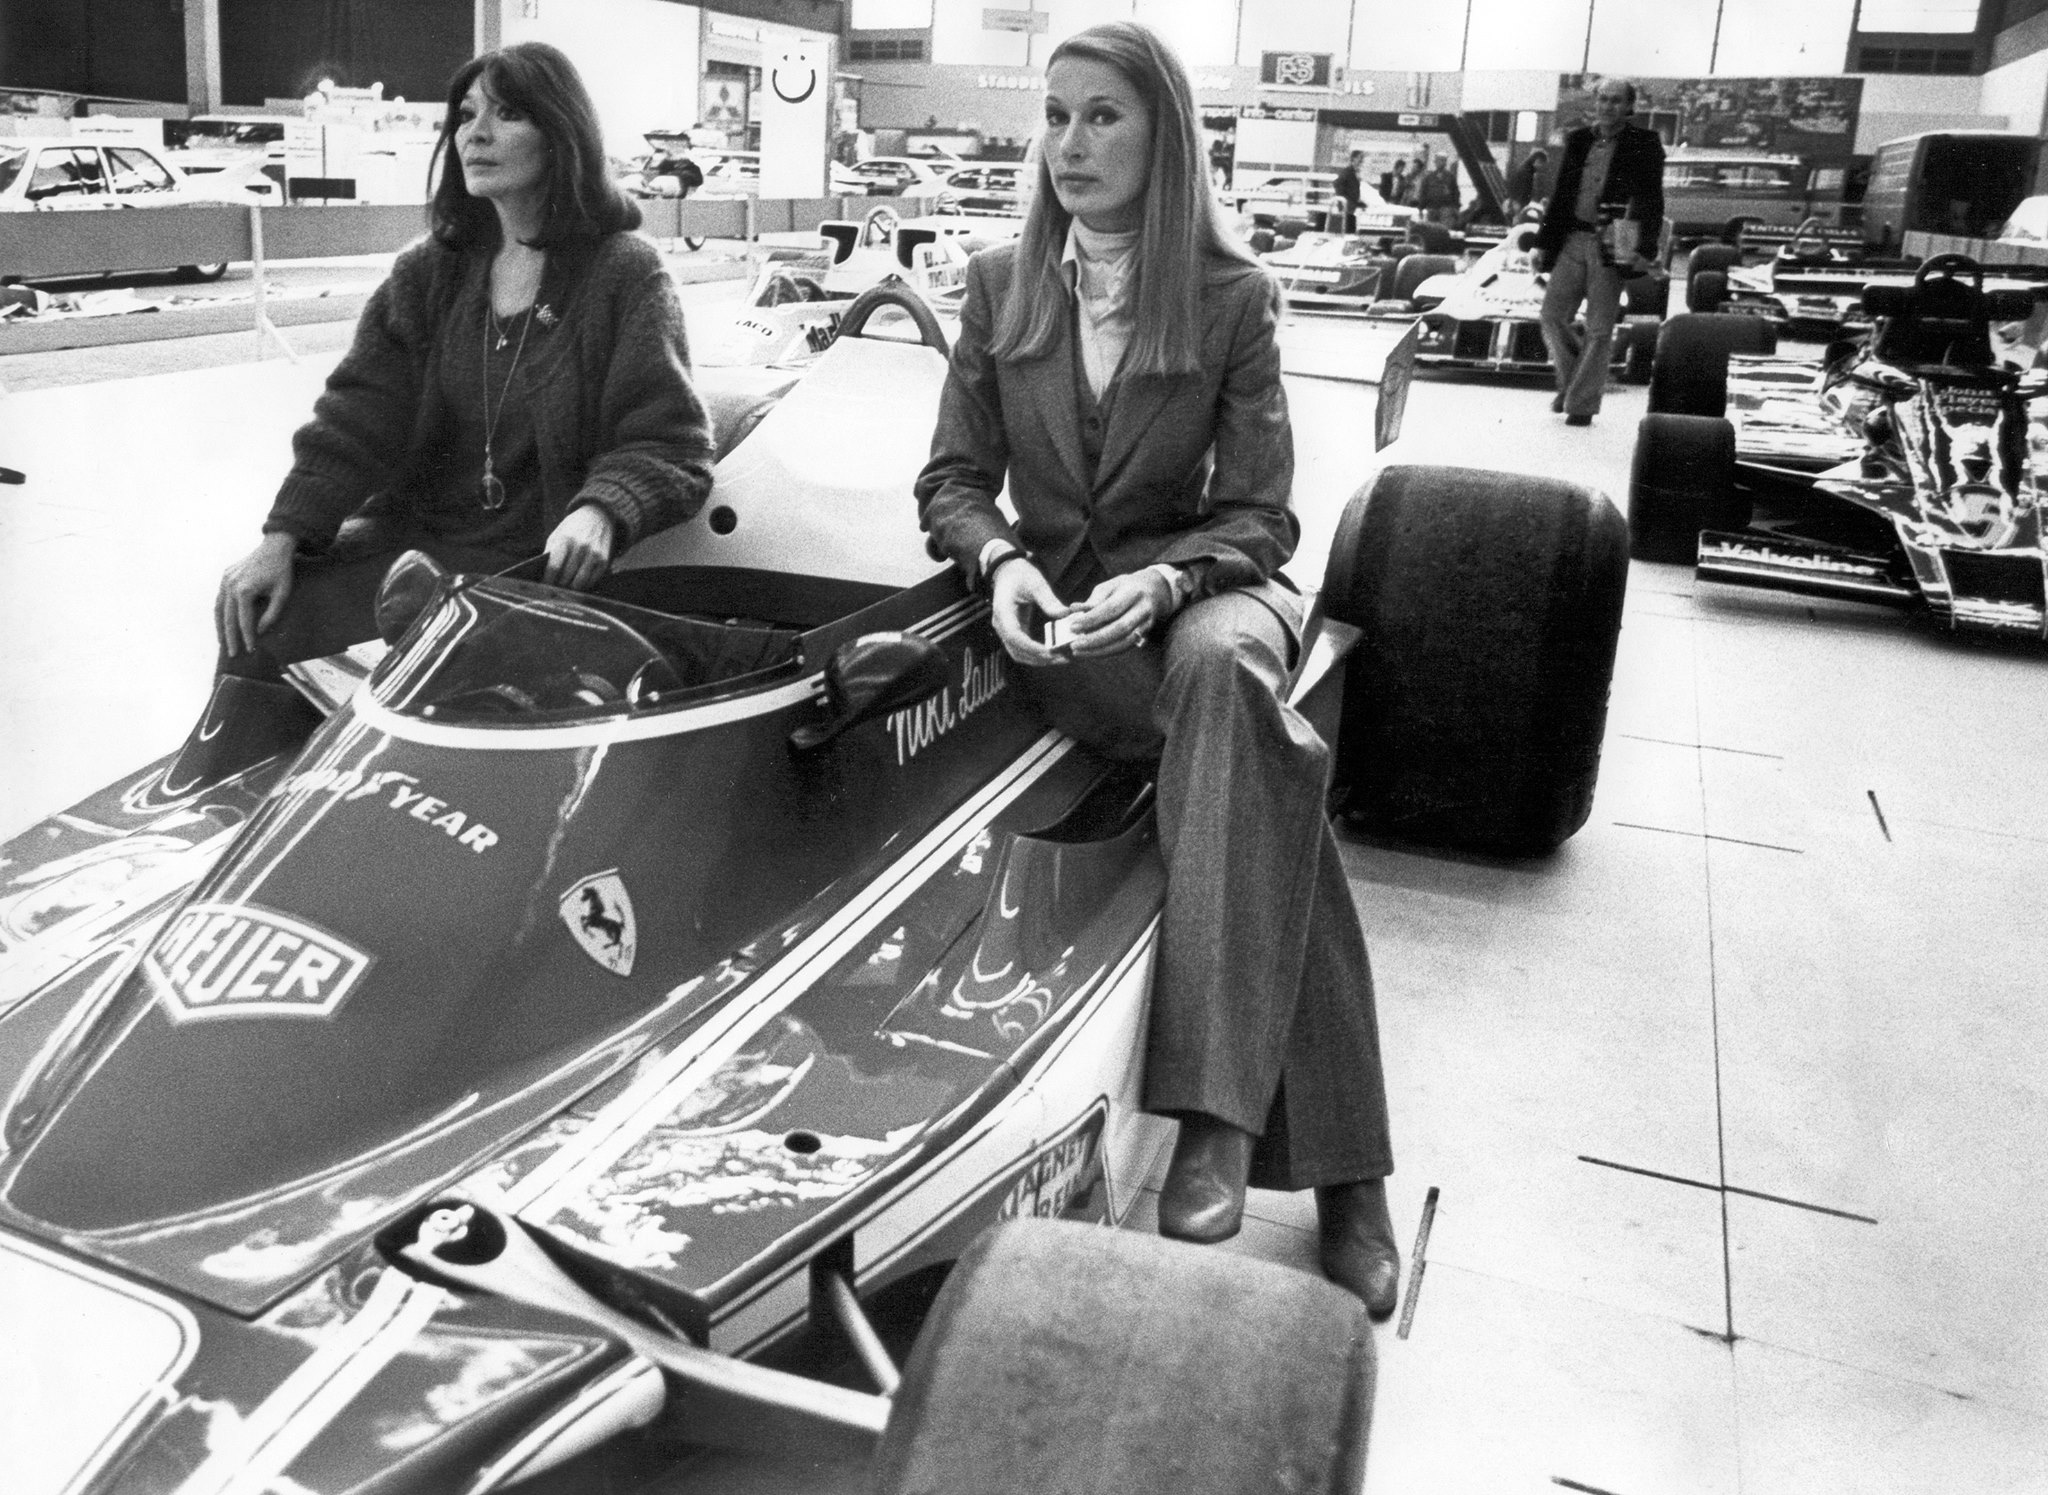 Juliette Greco and Nina Rindt with Niki Lauda's 1977 Ferrari.